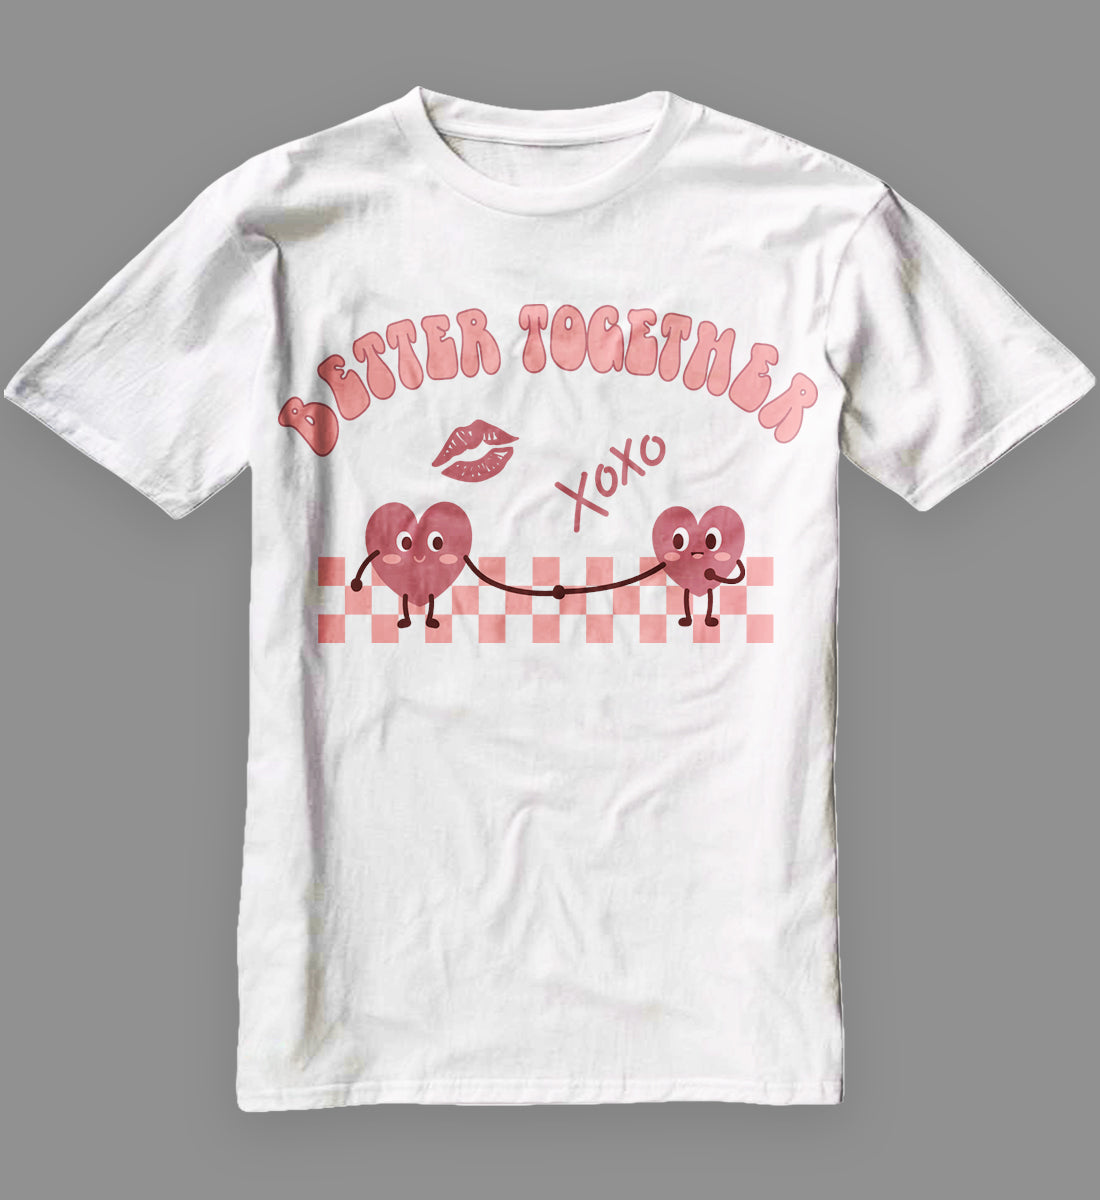 Better Together Retro Valentine Shirt, XOXO Tee